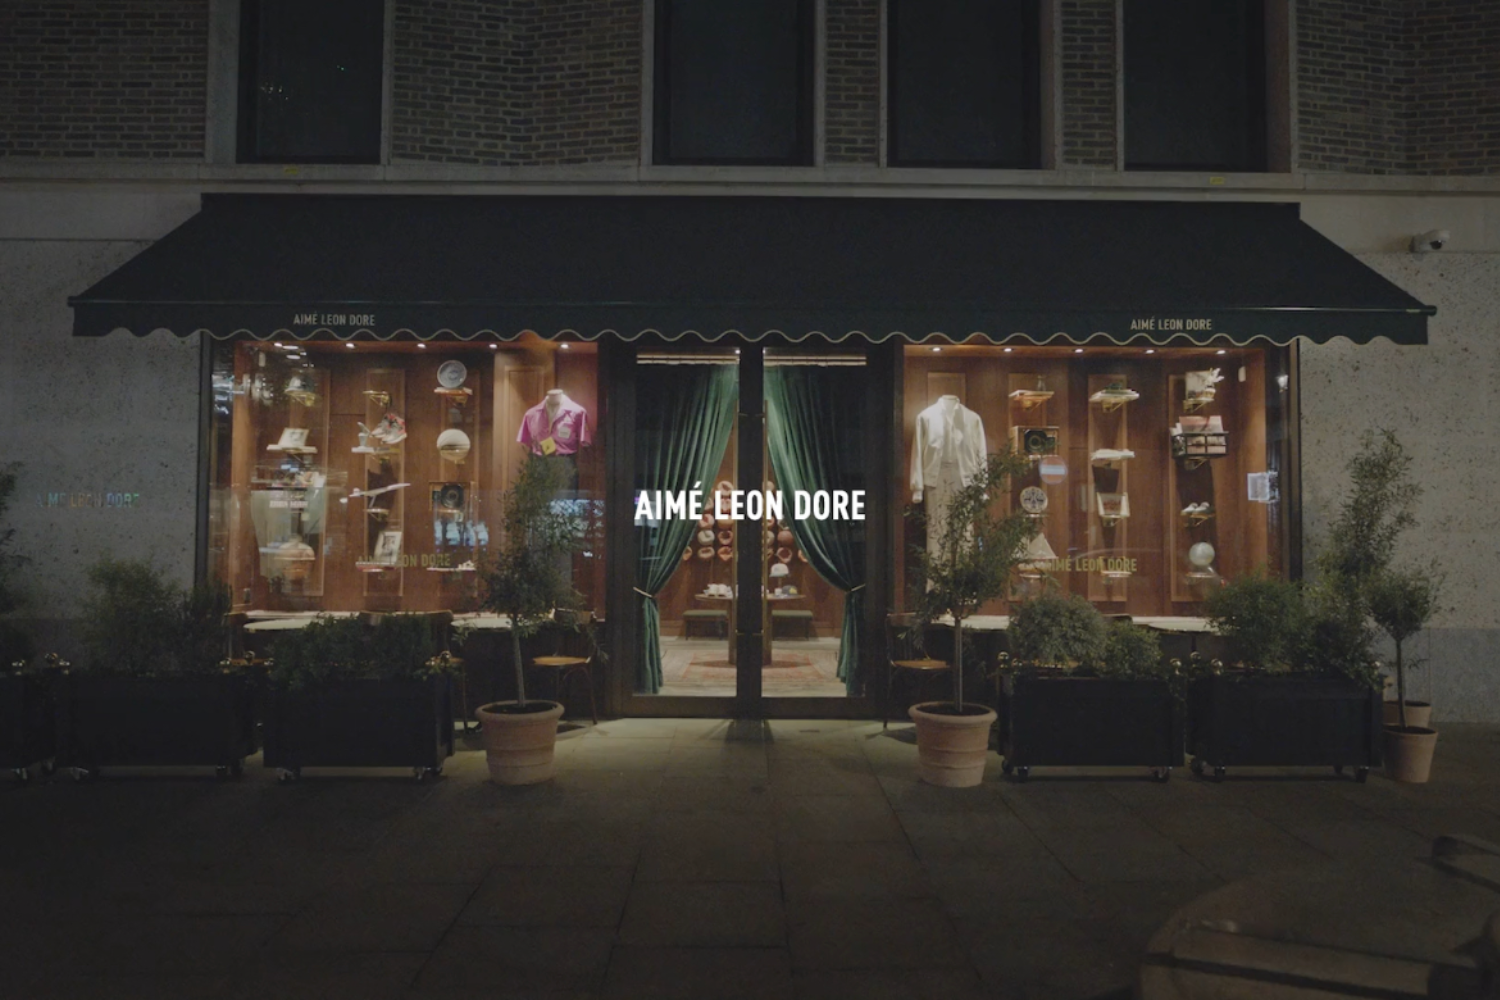 Café Leon Dore opens in London at Aimé Leon Dore's flagship store